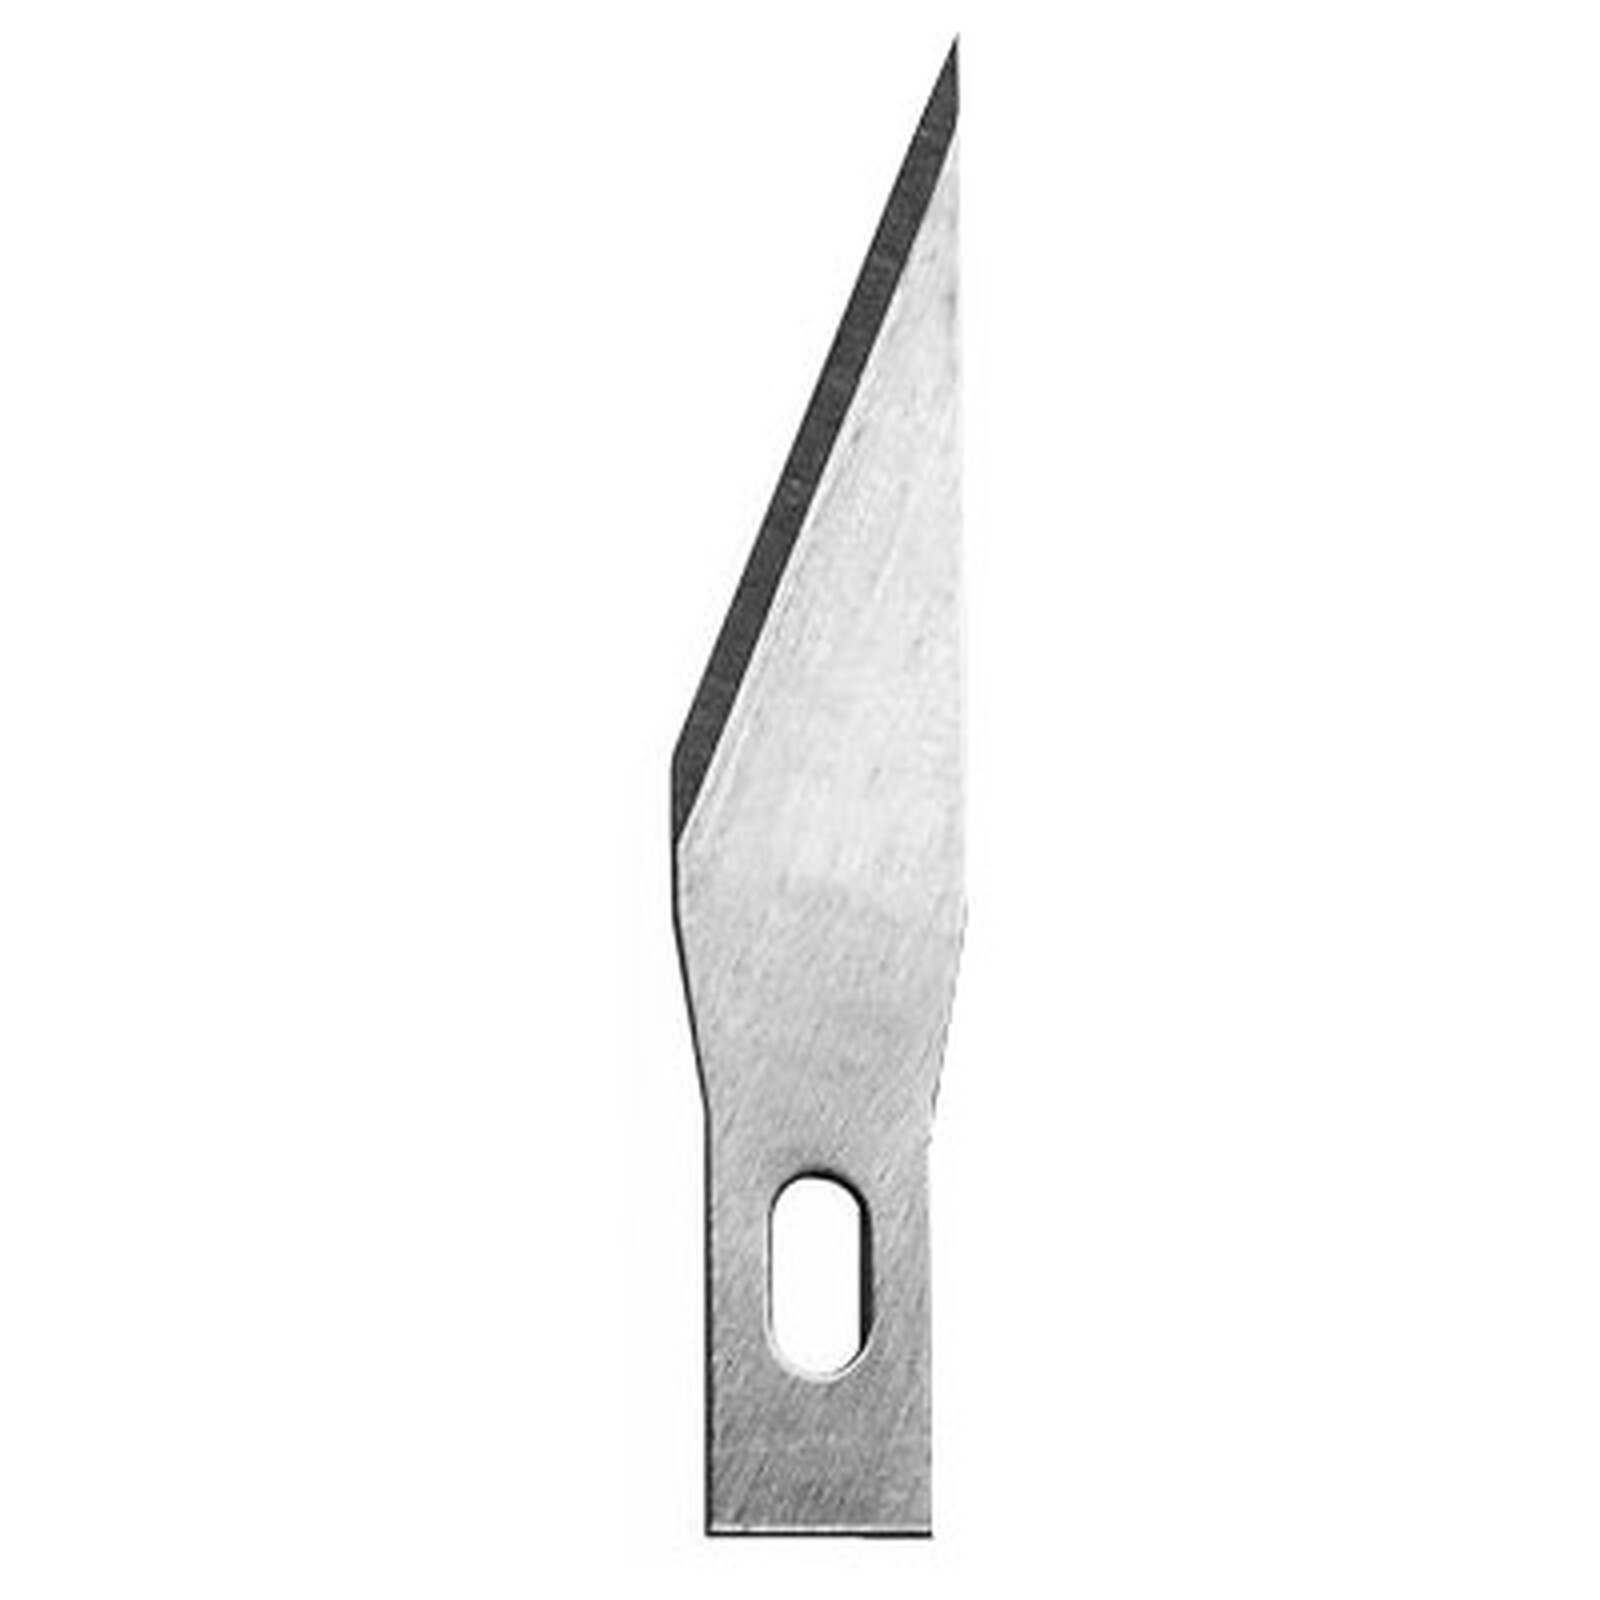 Extra fine cutter blades - Scissors & cutting - LDLC 3-year warranty